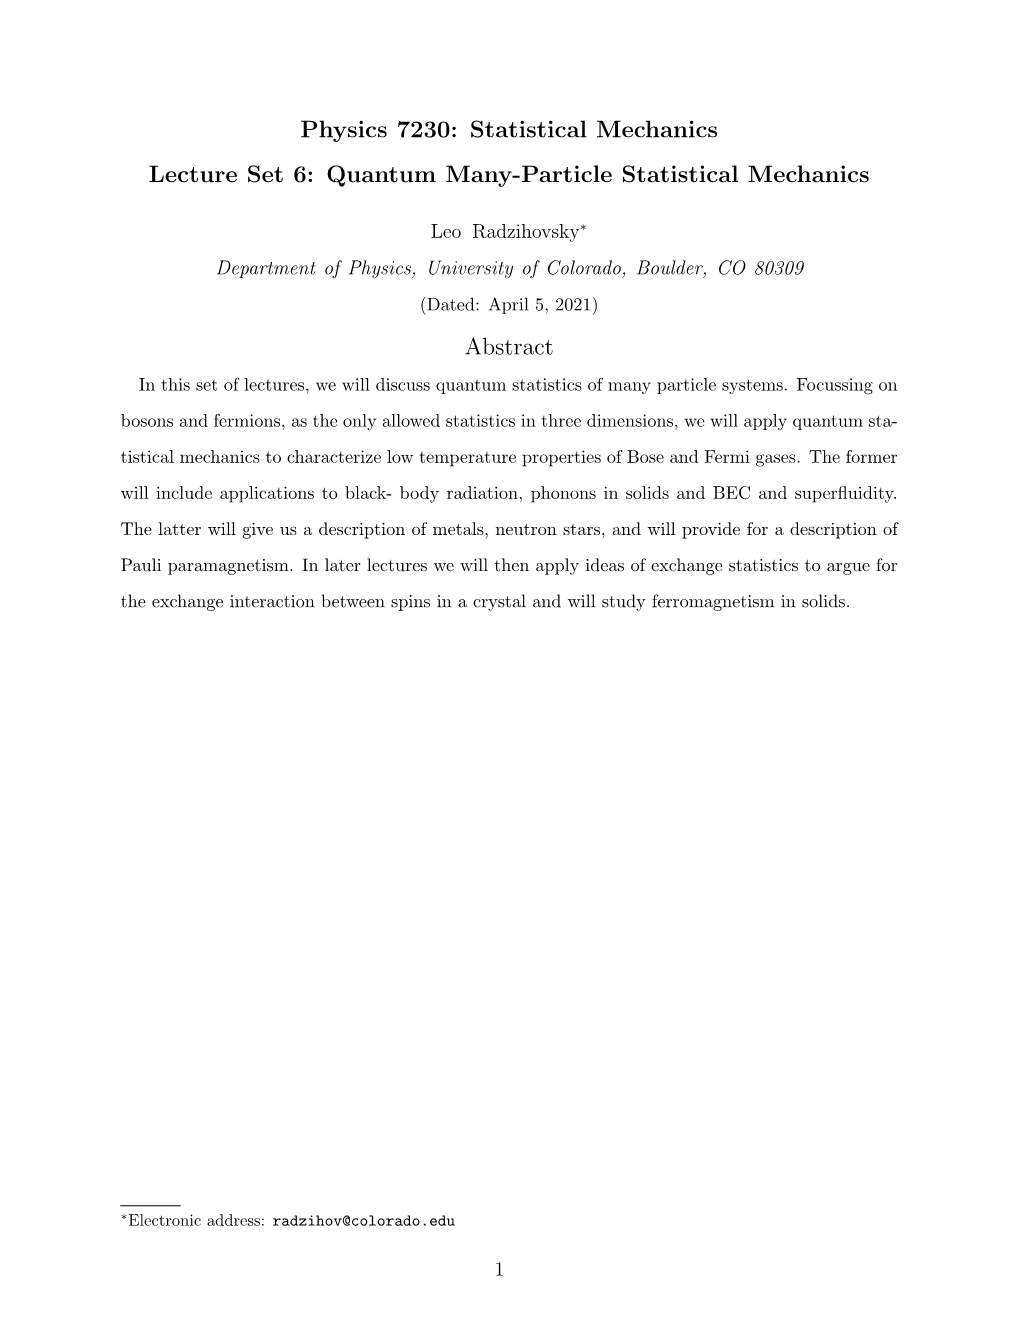 Lecture 6 Quantum Many-Particle